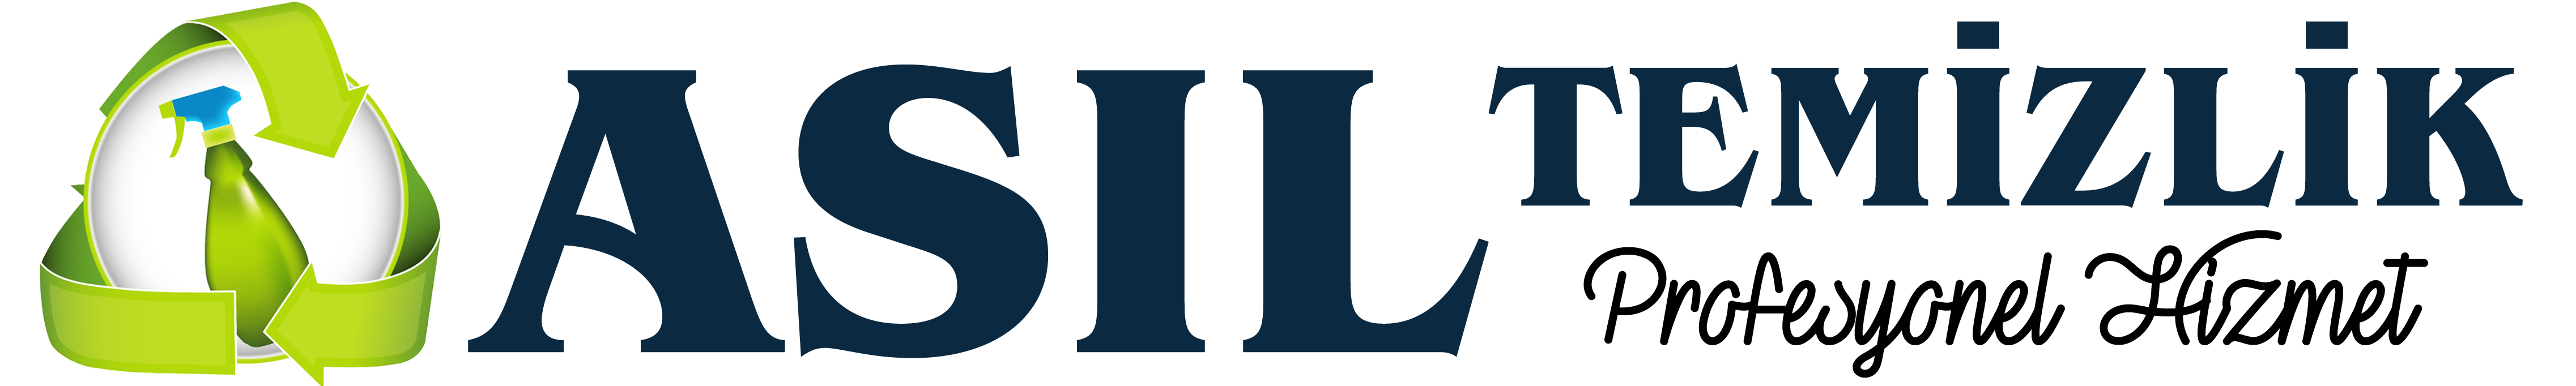 Konya Temizlik Firmasi - Asil Temizlik -Logo